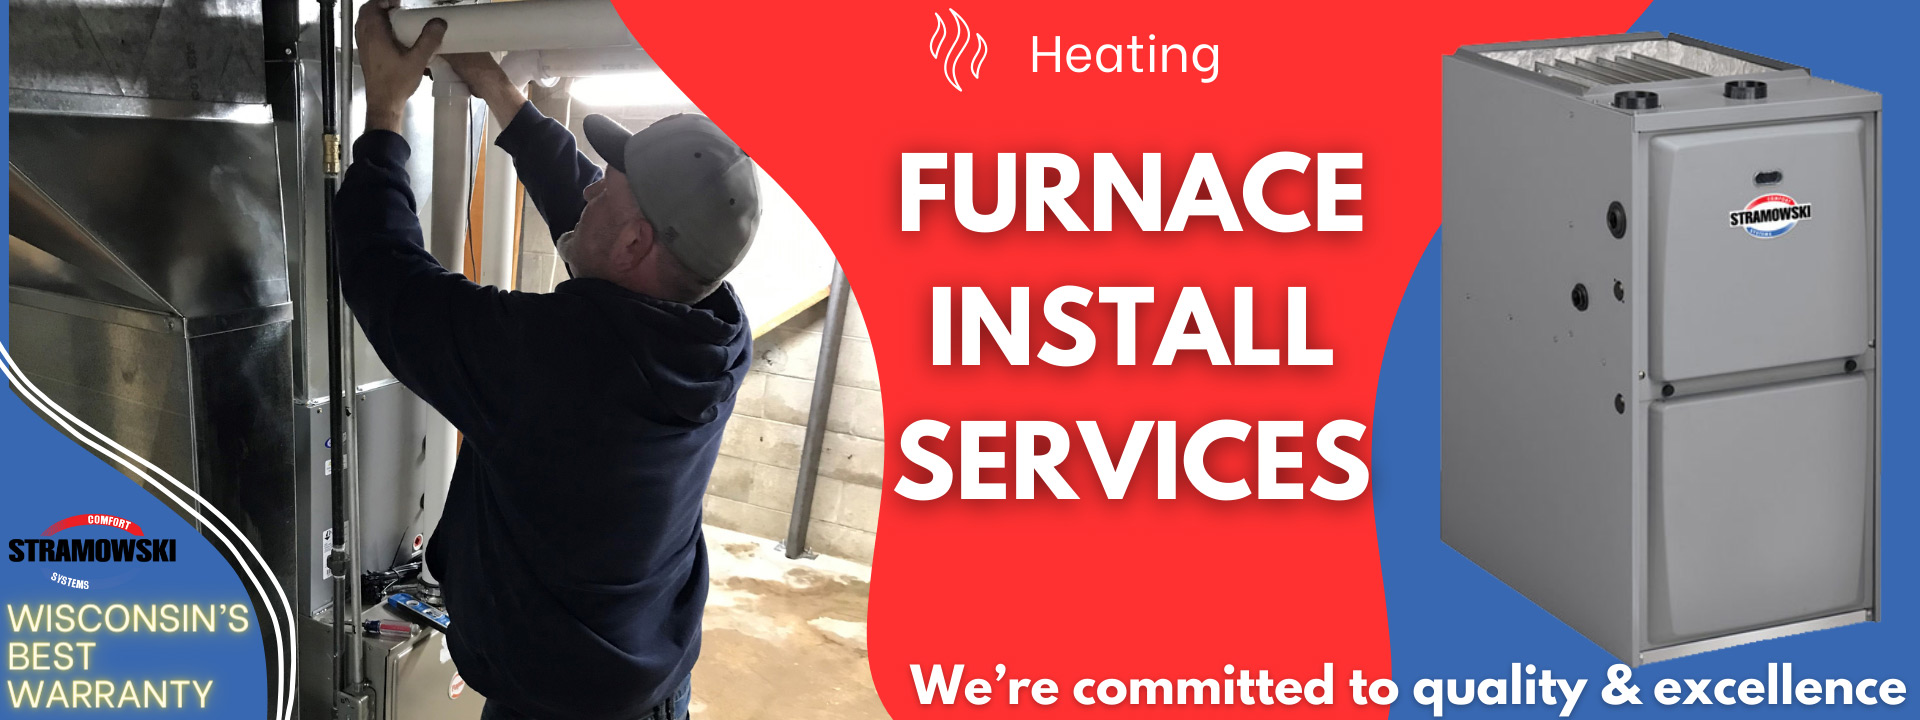 Furnace Installation Estimate Services